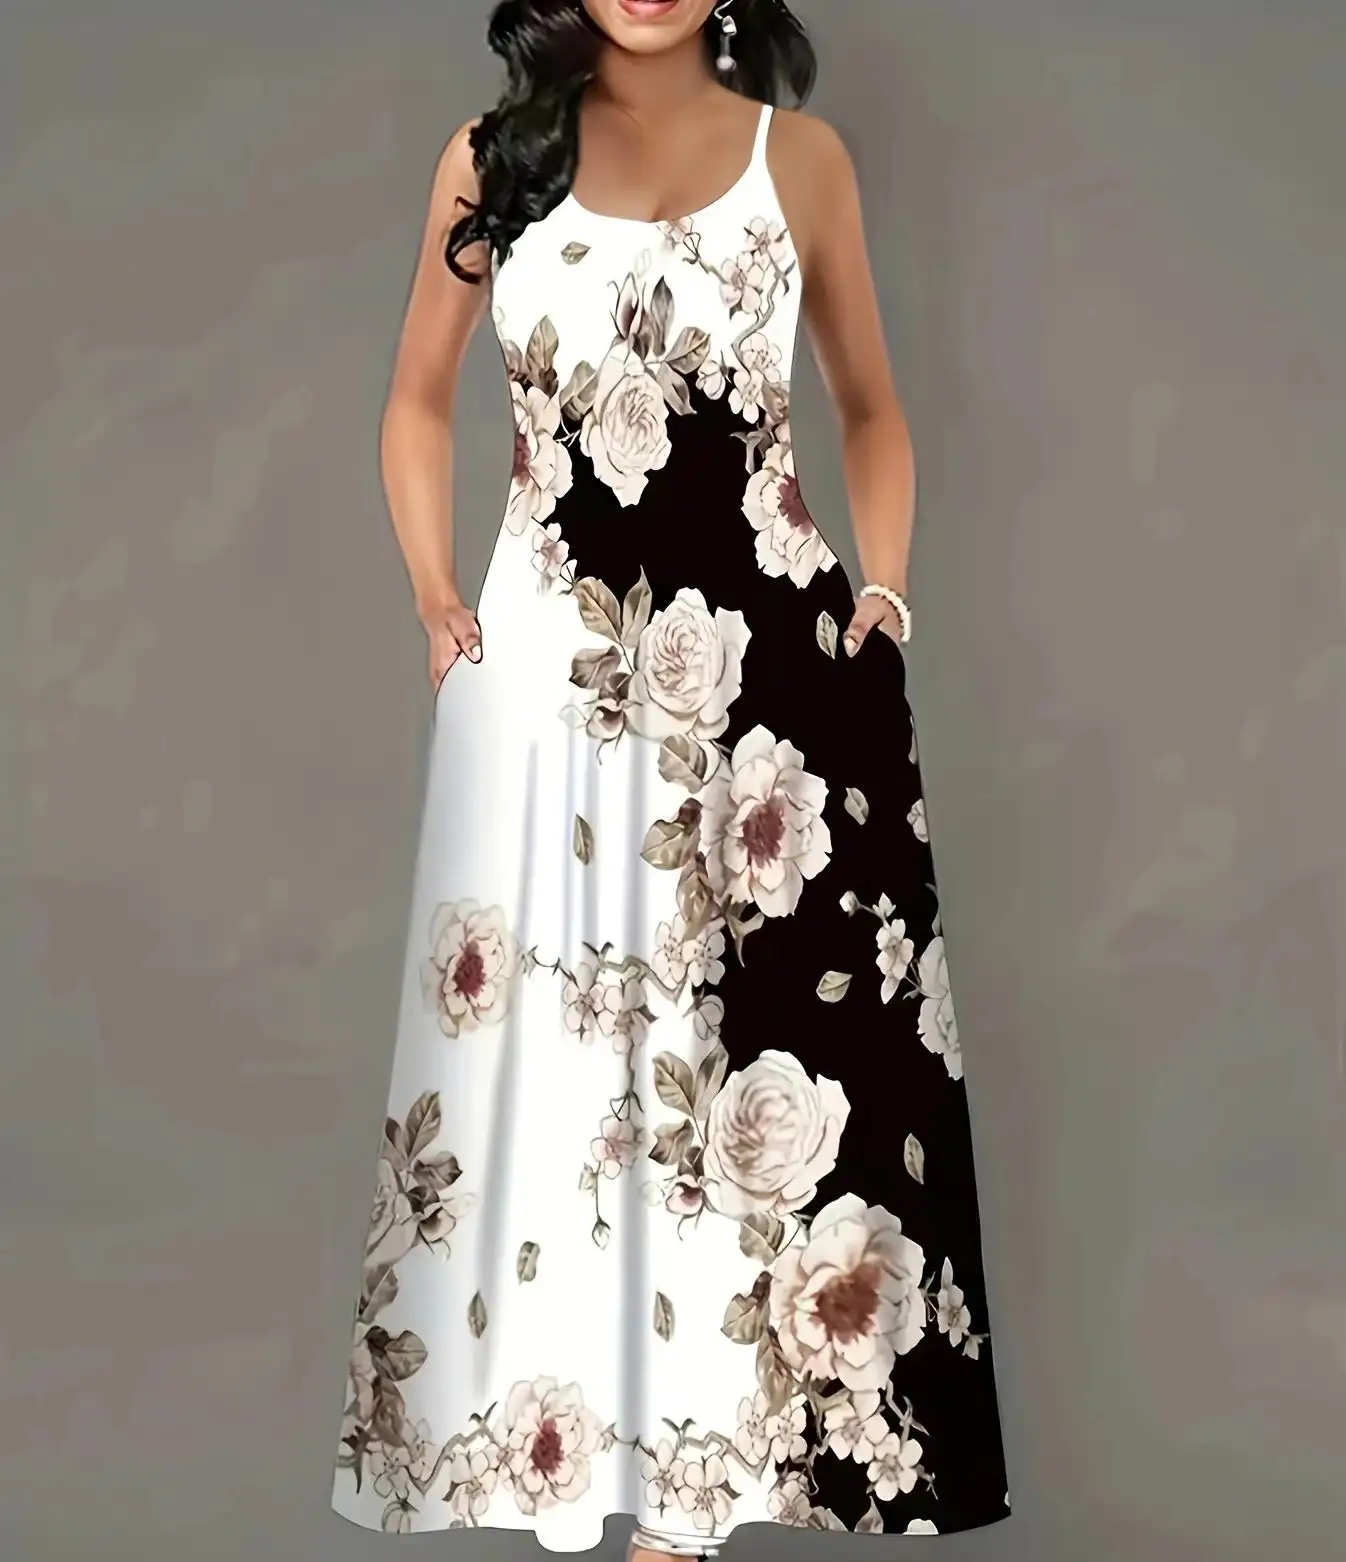 Floral Print off-the-shoulder A-line women's summer elegant casual evening dress